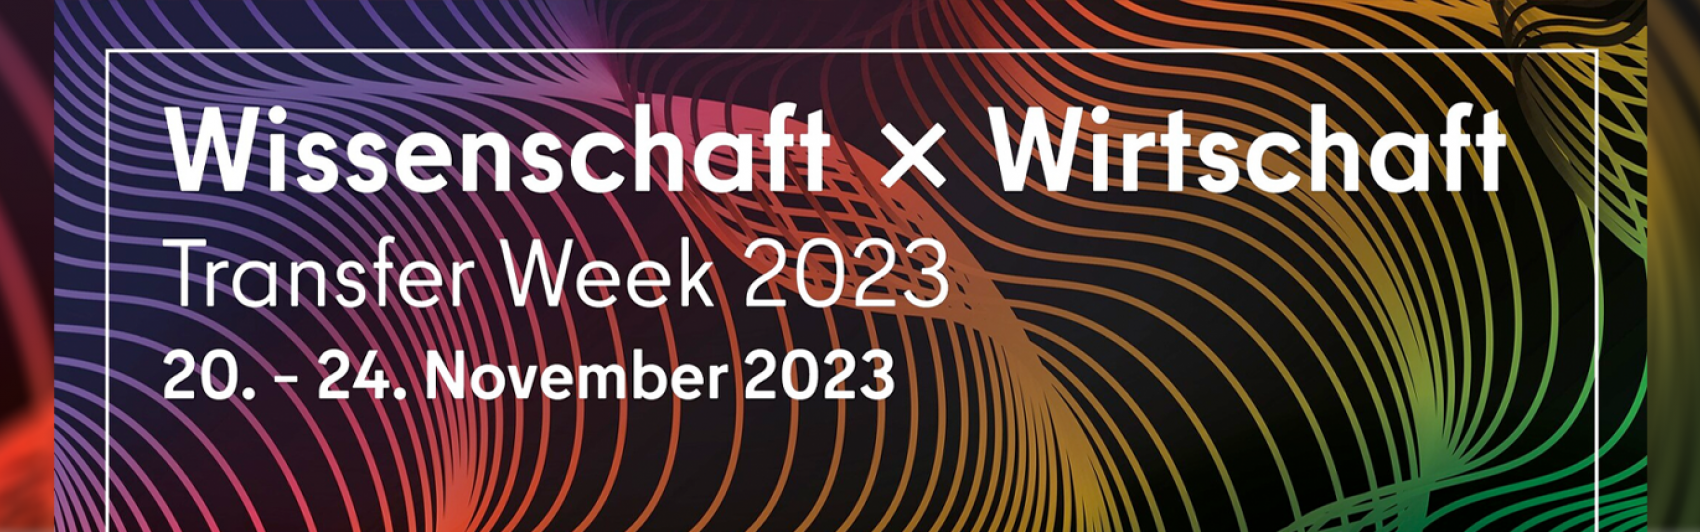 Transfer Week 2023, Wissenschaft, Wirtschaft, Berlin, Innovation